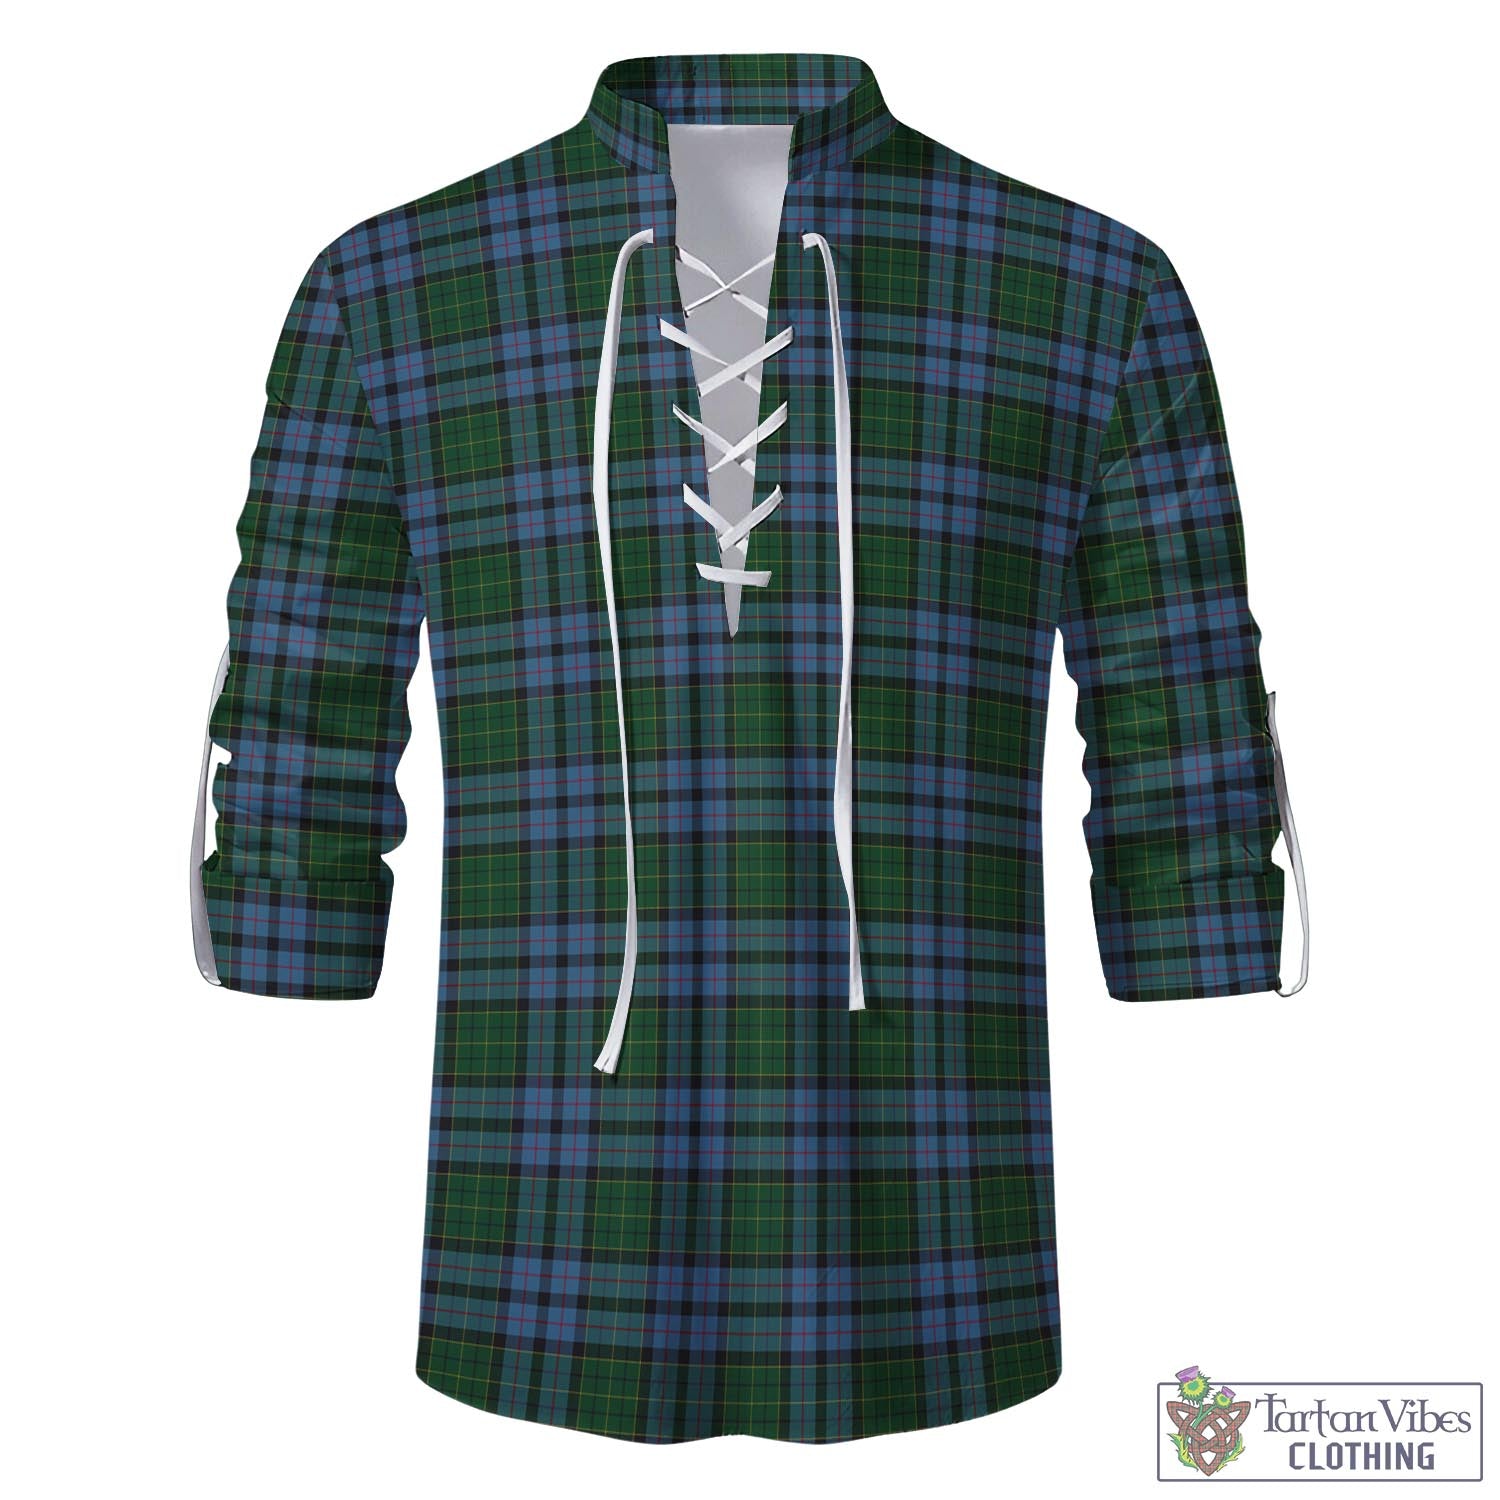 Tartan Vibes Clothing Forsyth Tartan Men's Scottish Traditional Jacobite Ghillie Kilt Shirt